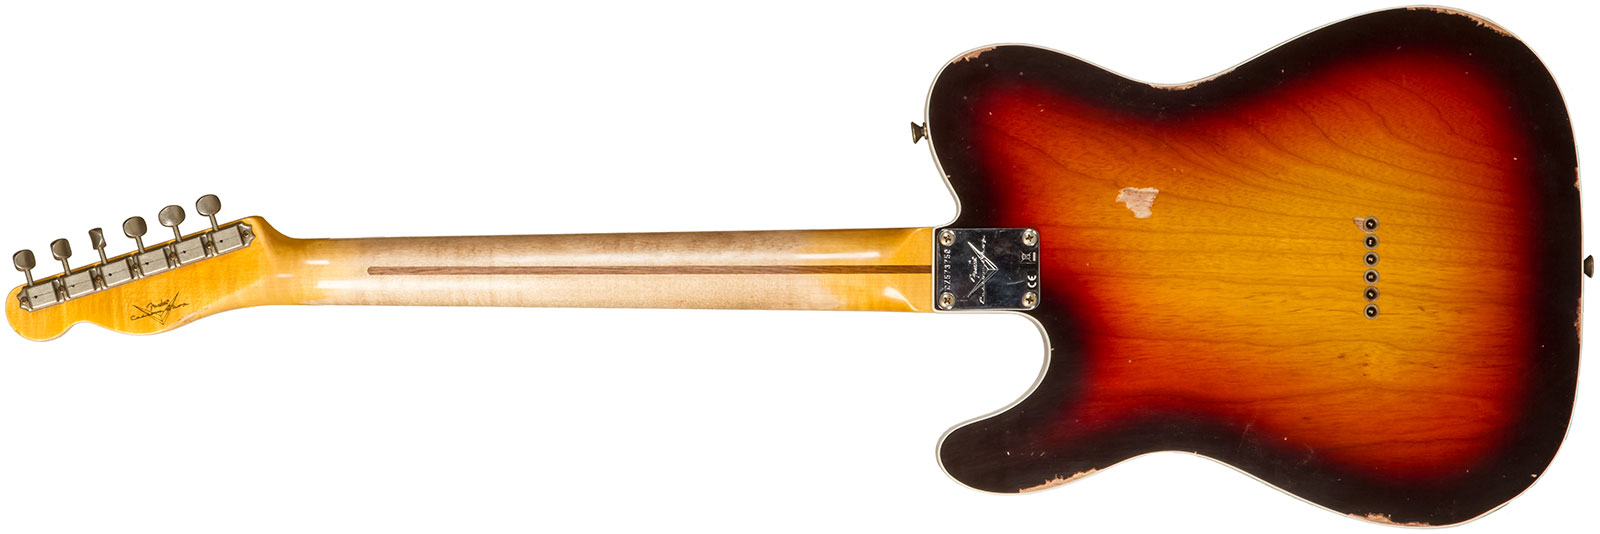 Fender Custom Shop Tele Custom 1959 2s Ht Mn #cz573750 - Relic Chocolate 3-color Sunburst - E-Gitarre in Teleform - Variation 1